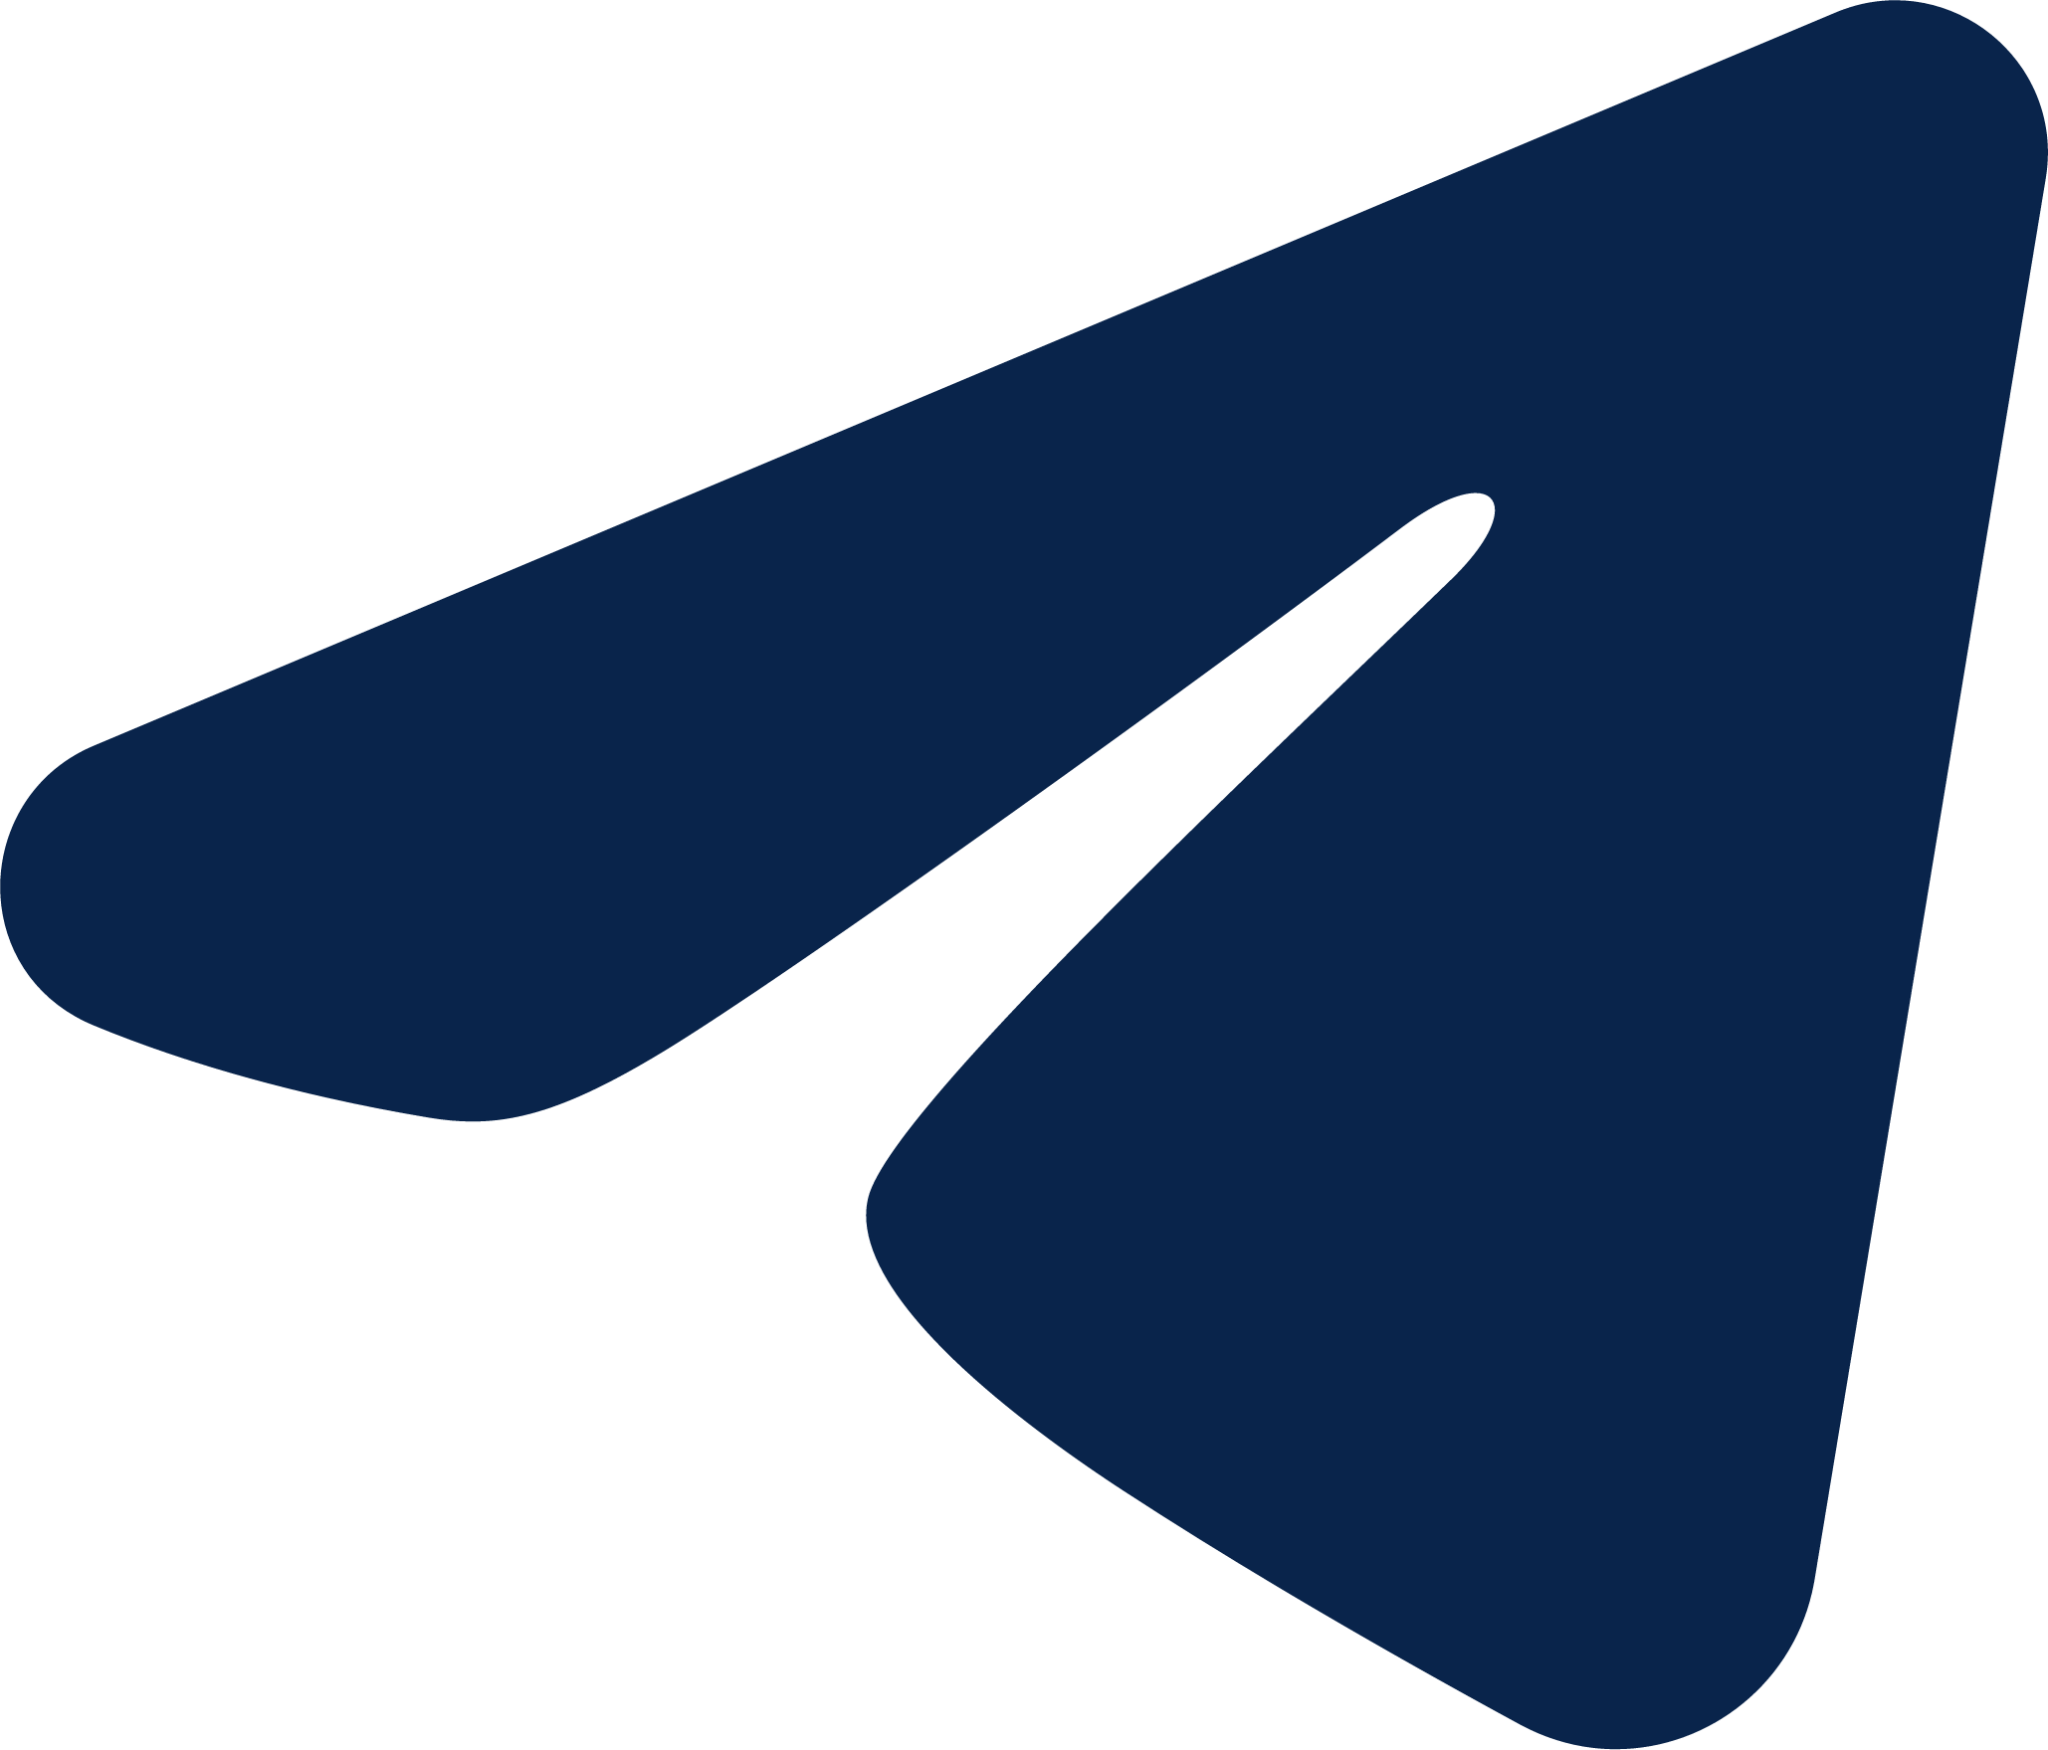 telegram fill logo icon